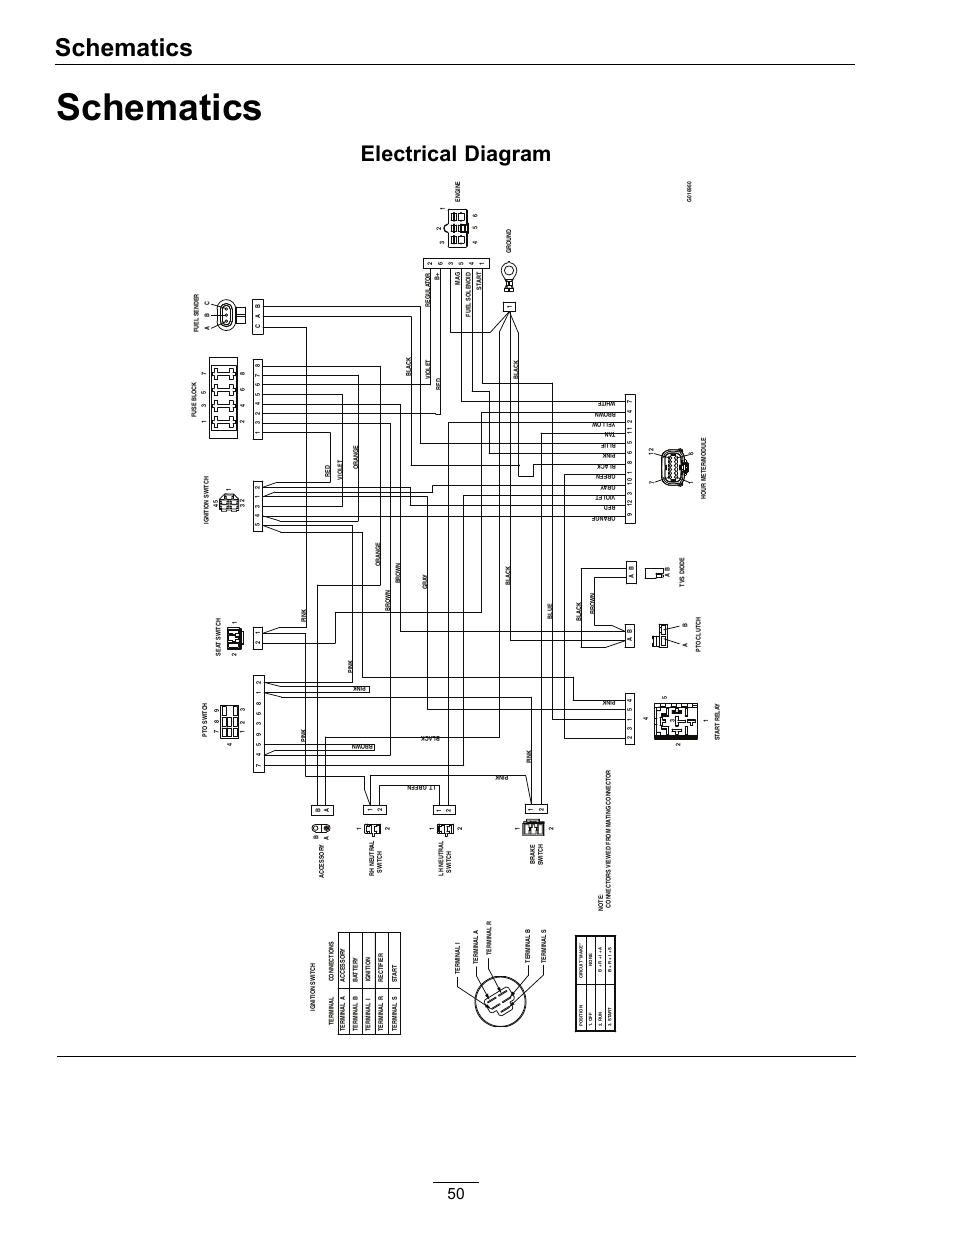 podtronics 3 phase regulator wiring diagram